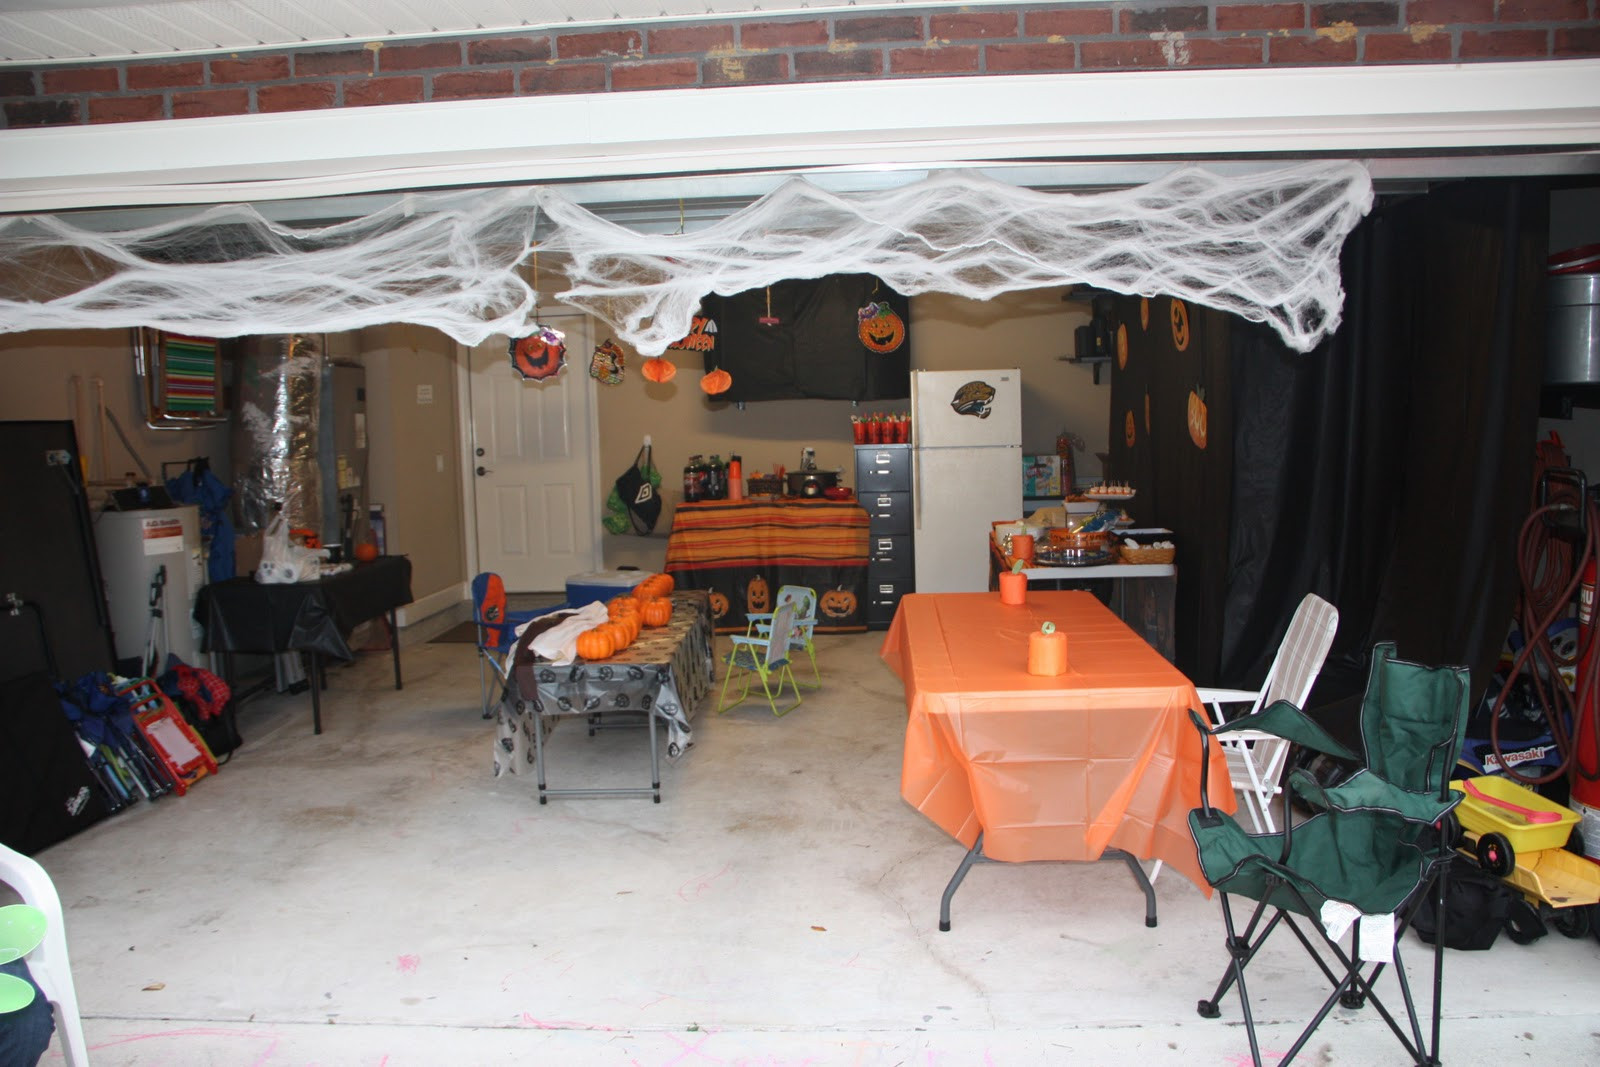 Halloween Basement Decorating Ideas
 Garage Party Ideas